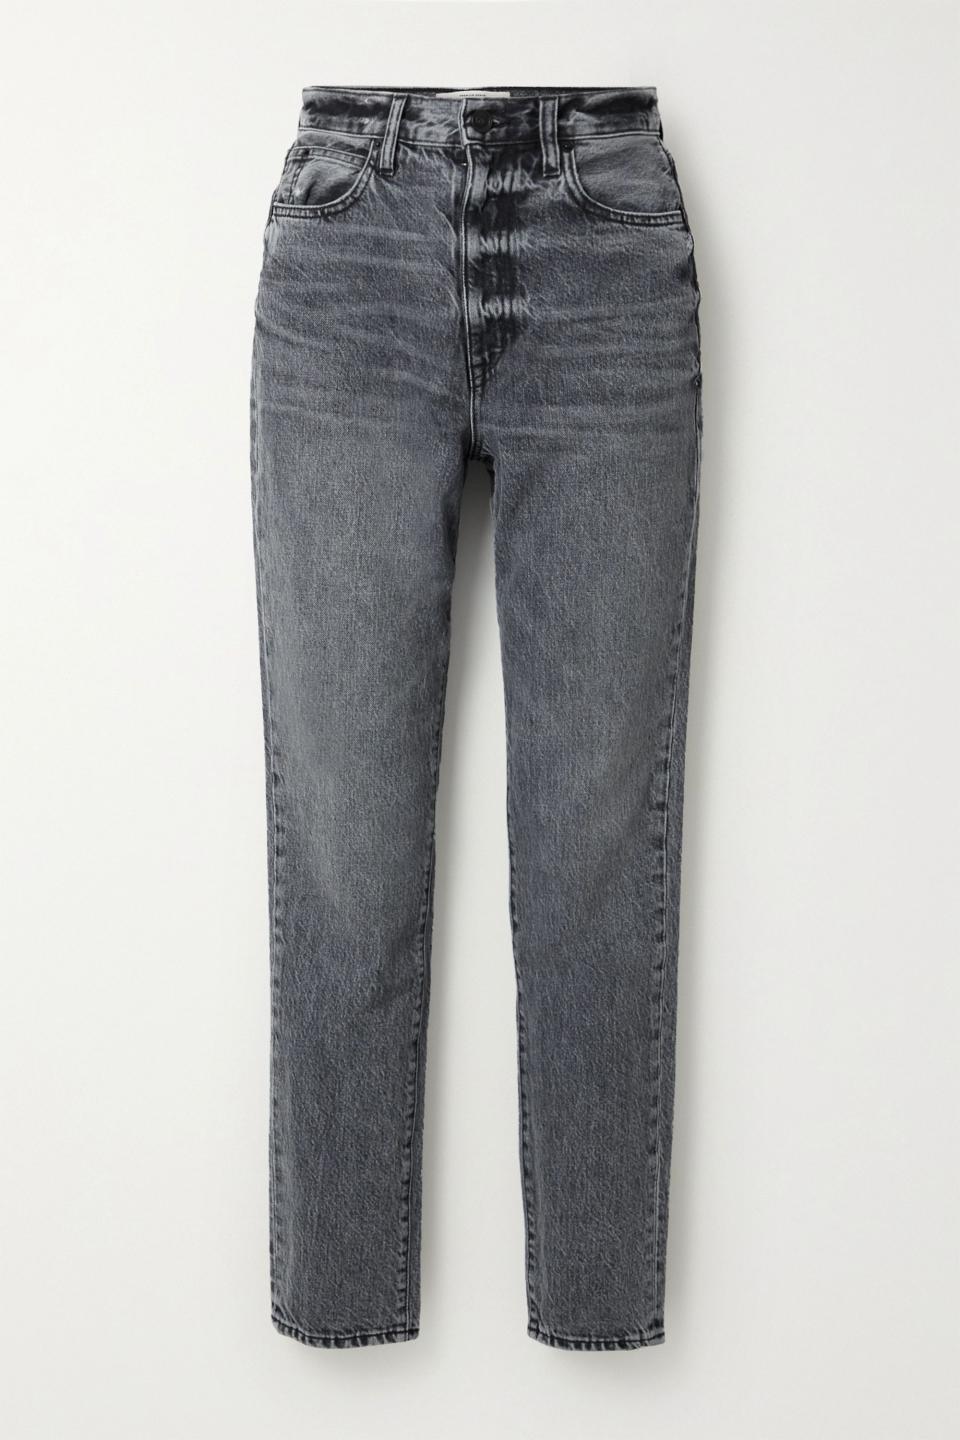 2) Beatnik high-rise slim-leg jeans